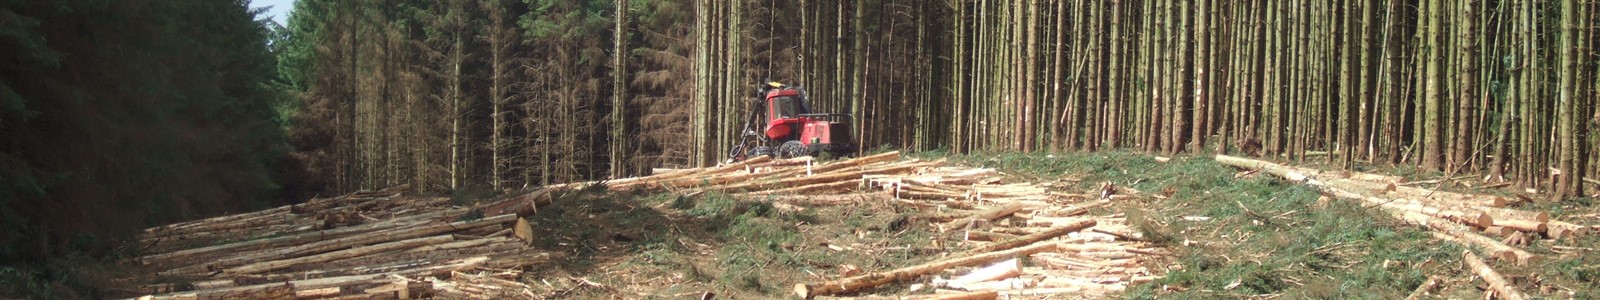 Timber harvesting